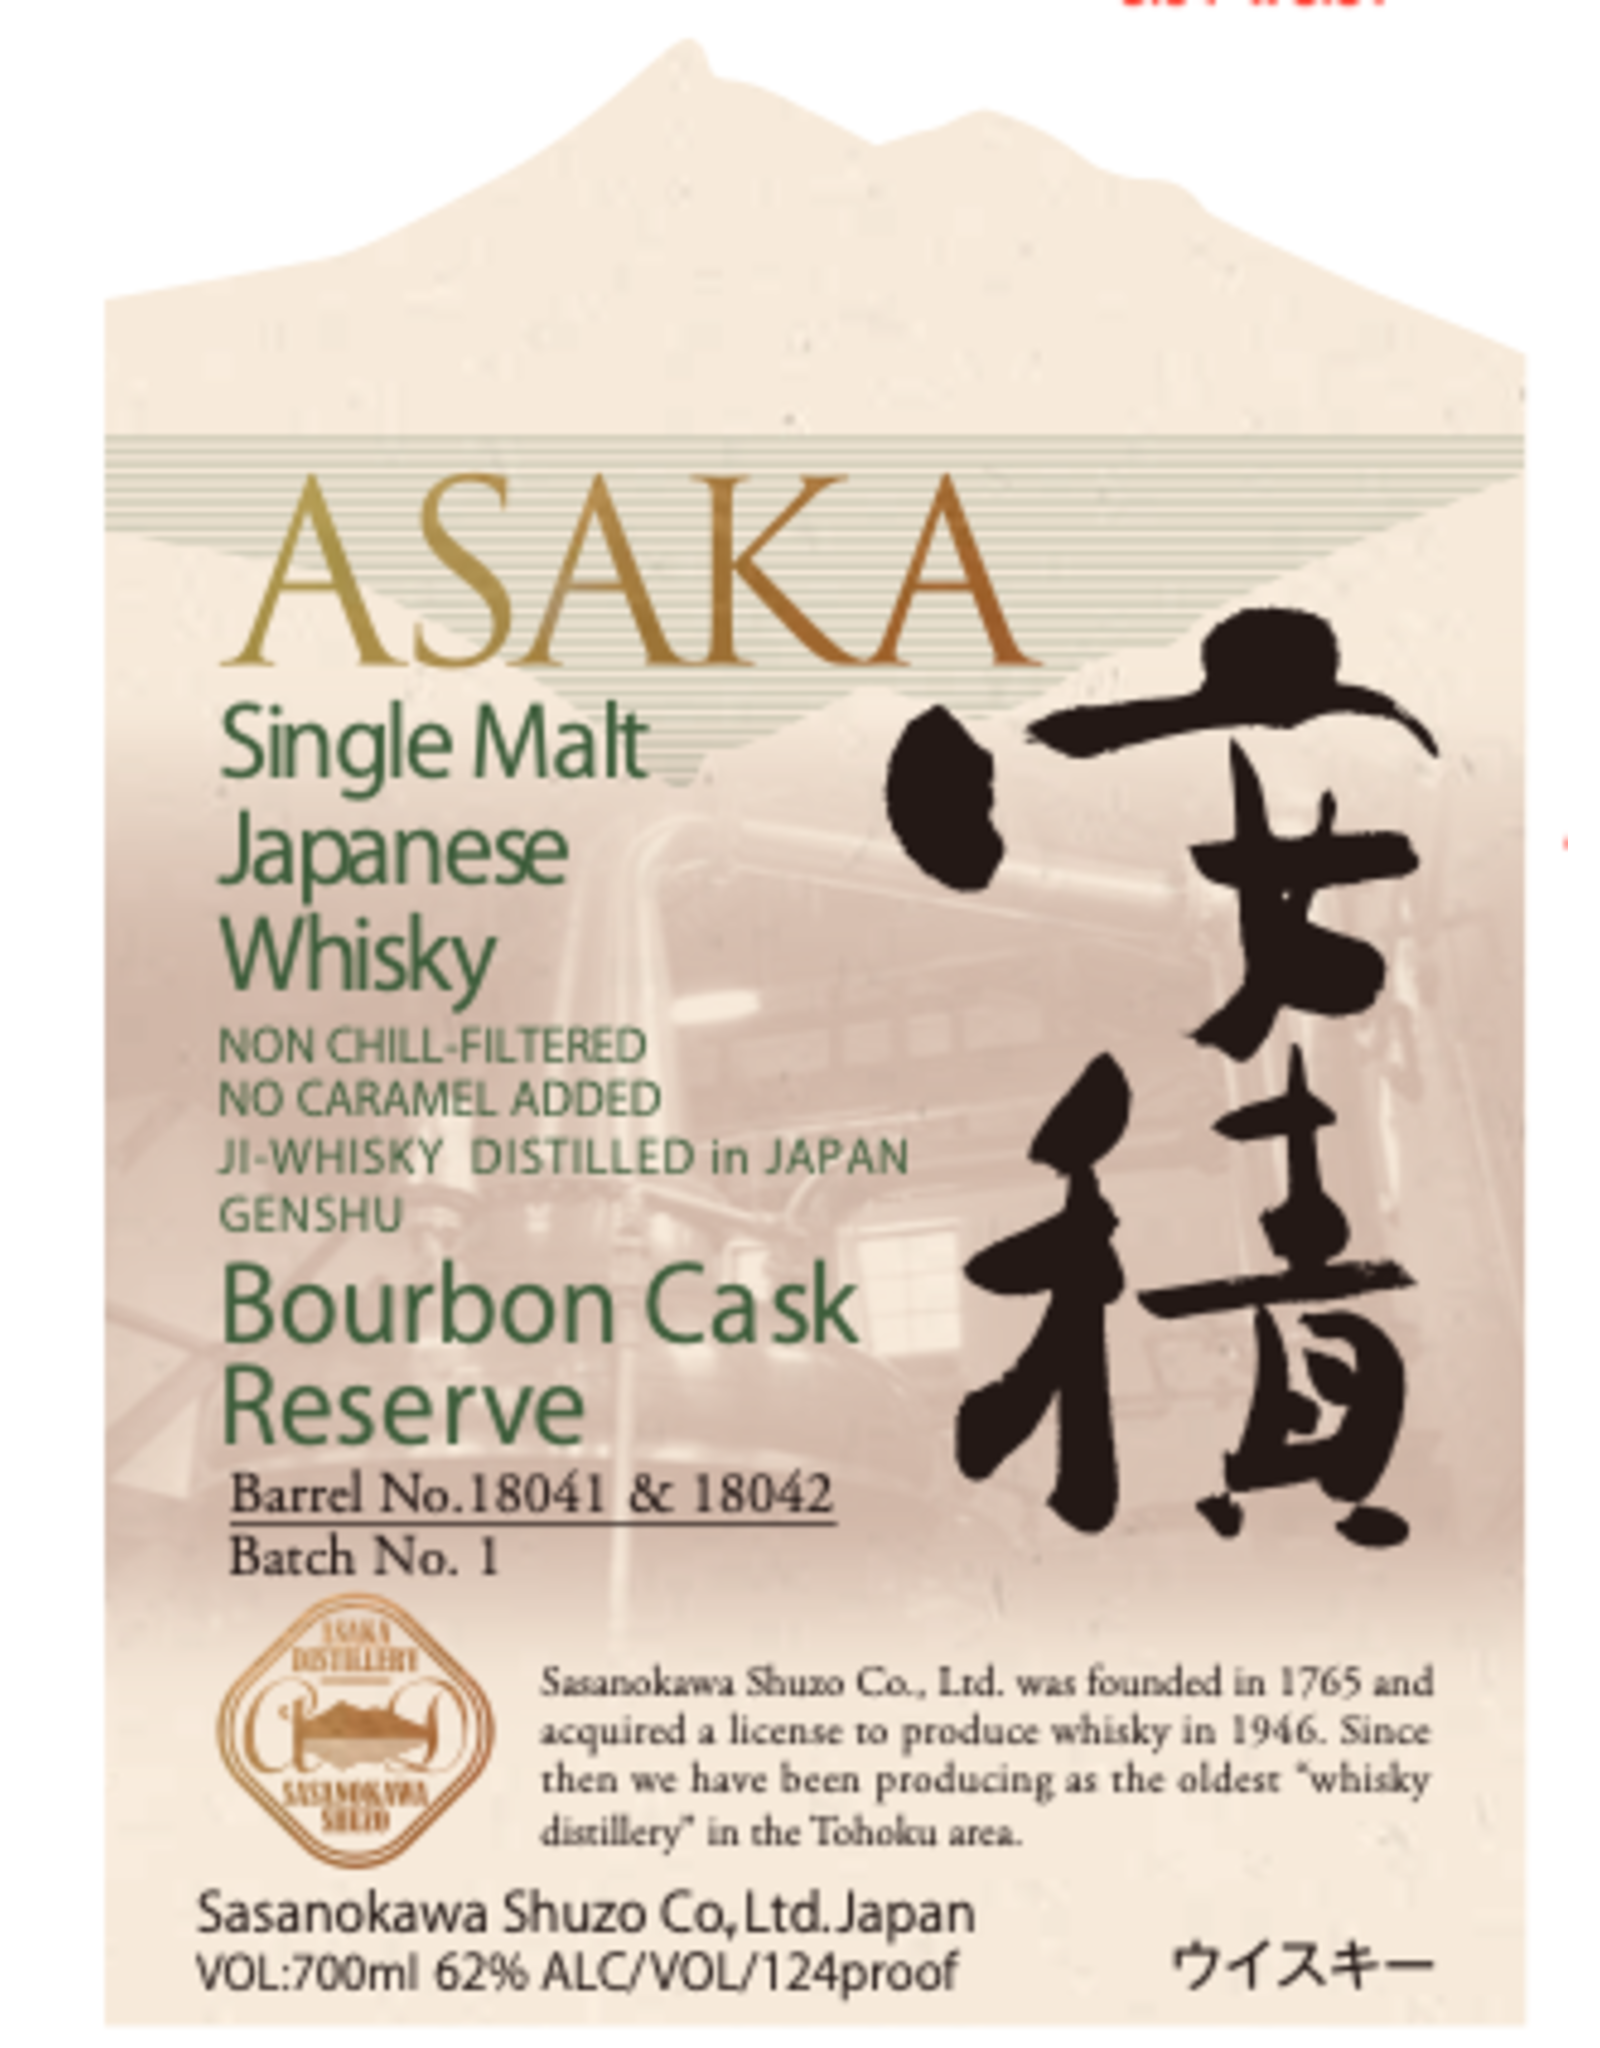 Asaka Distillery Asaka Distillery, Bourbon Cask Reserve, Batch 01, Barrel No. 18041 & 18042 Genshu (Cask Strength) Single Malt Whisky, Koriyama, Fukushima, Japan 122pf